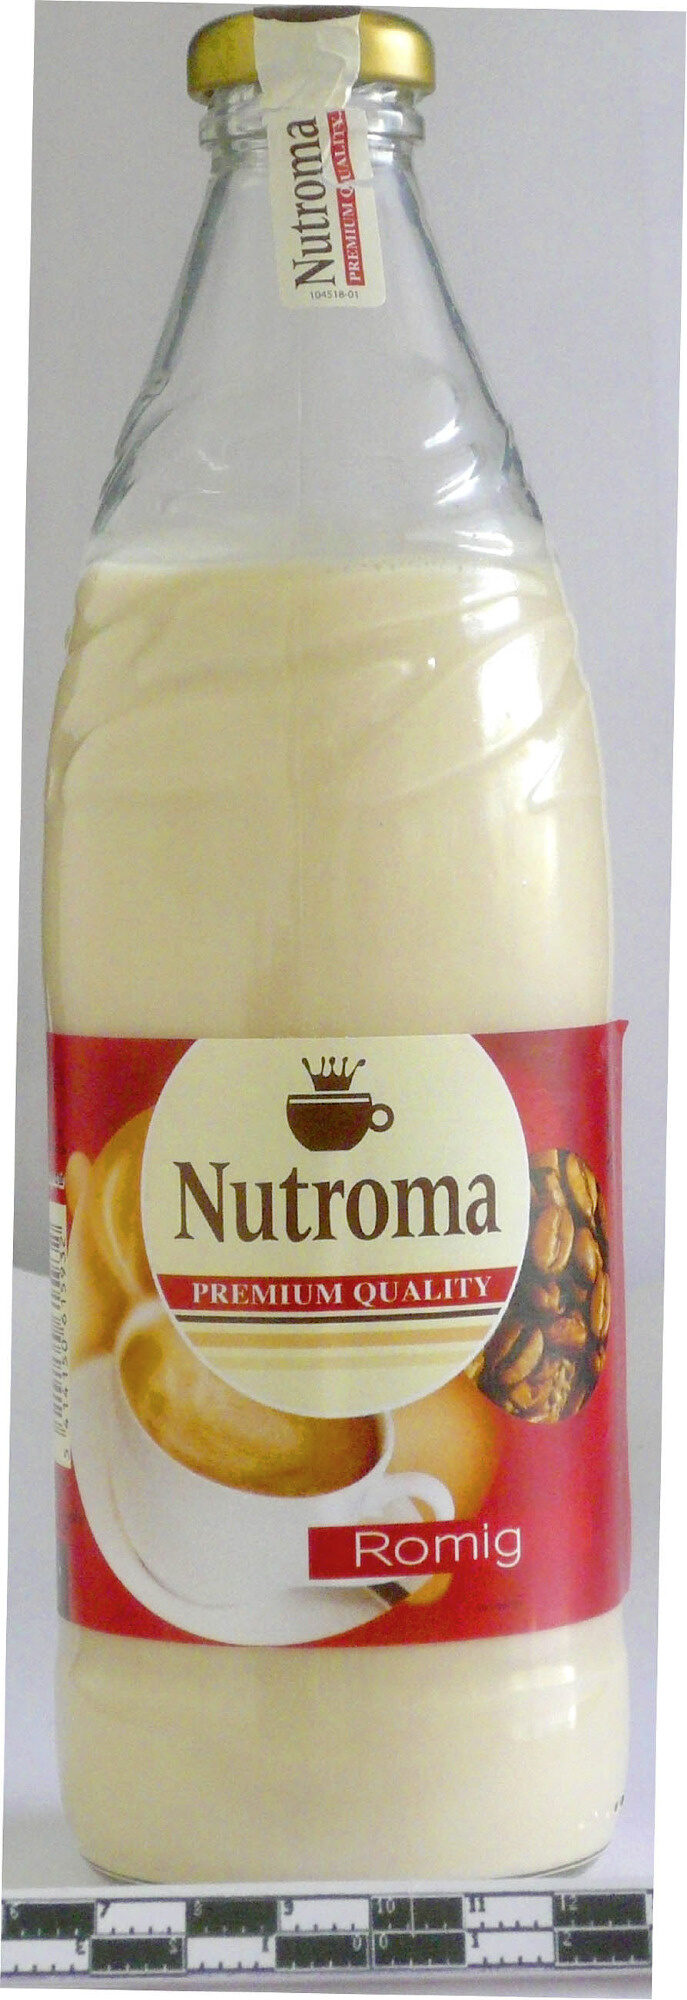 Nutroma - Product